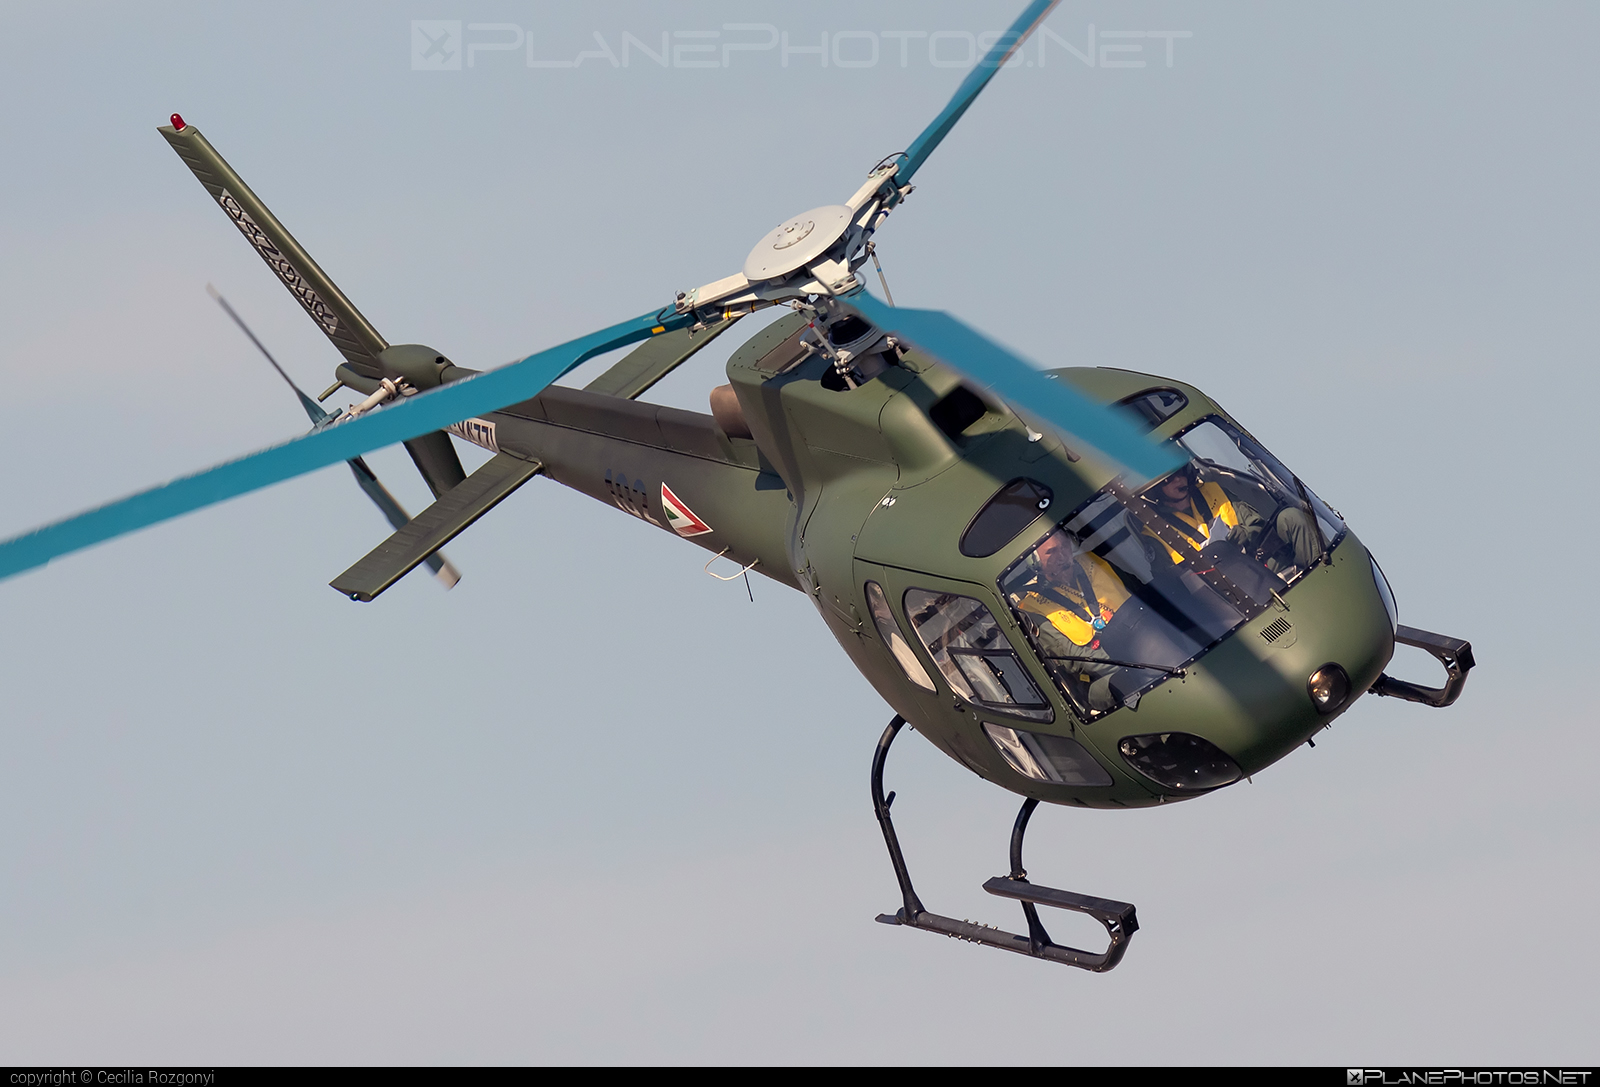 Aerospatiale AS350 B2 Ecureuil - 102 operated by Magyar Légierő (Hungarian Air Force) #aerospatiale #as350 #as350b2 #as350b2ecureuil #as350ecureuil #hungarianairforce #magyarlegiero